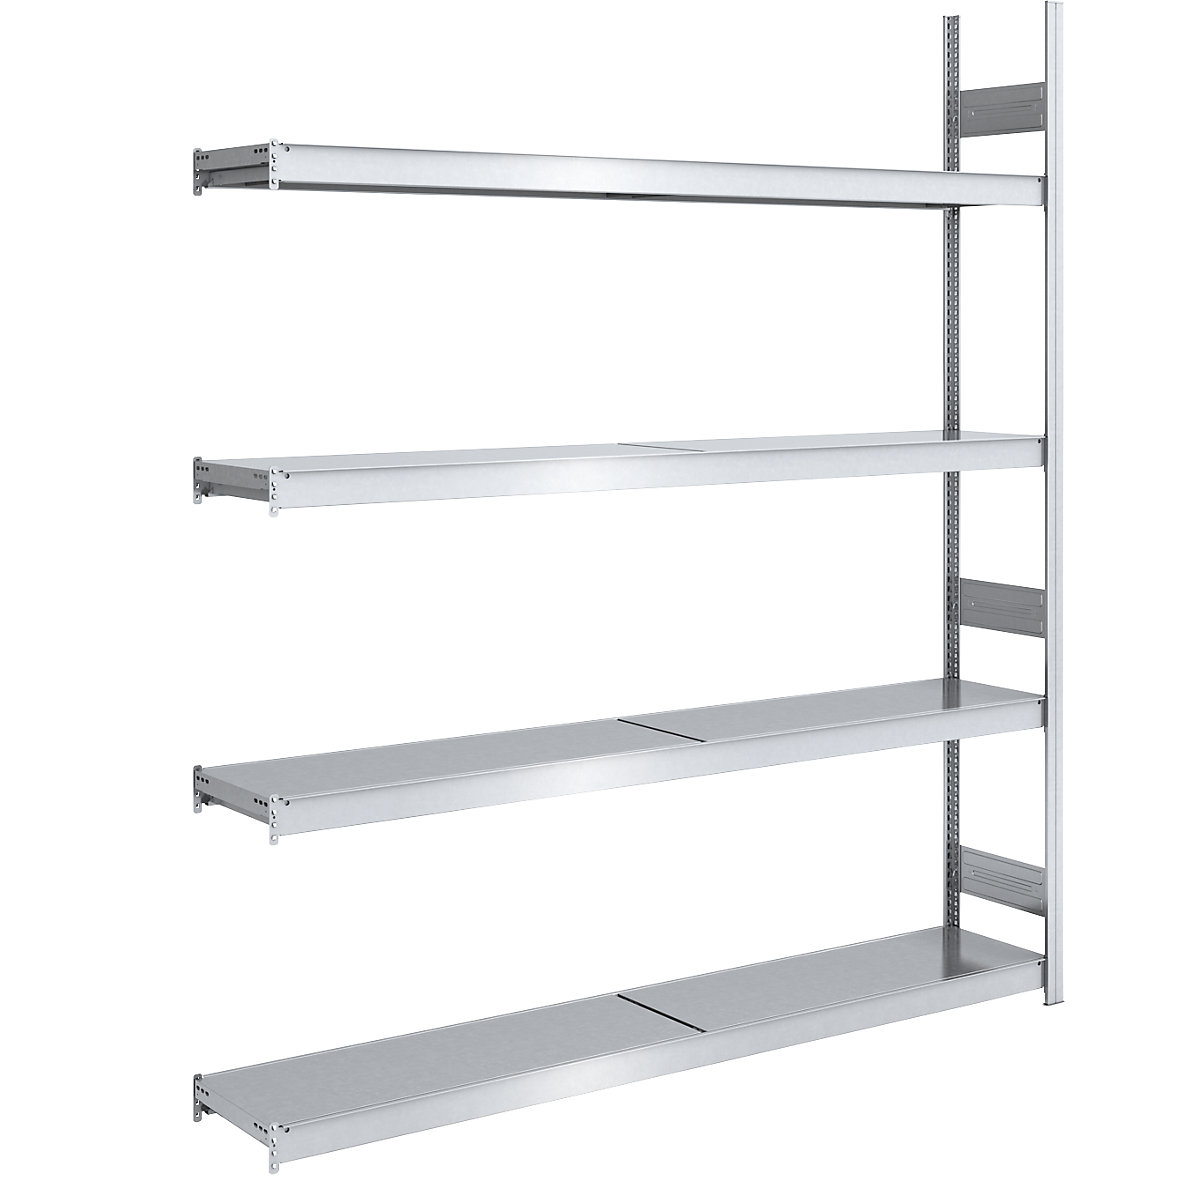 Wide span boltless shelving unit, zinc plated – hofe, shelf WxD 2000 x 400 mm, extension shelf unit, 4 steel shelves, height 2500 mm